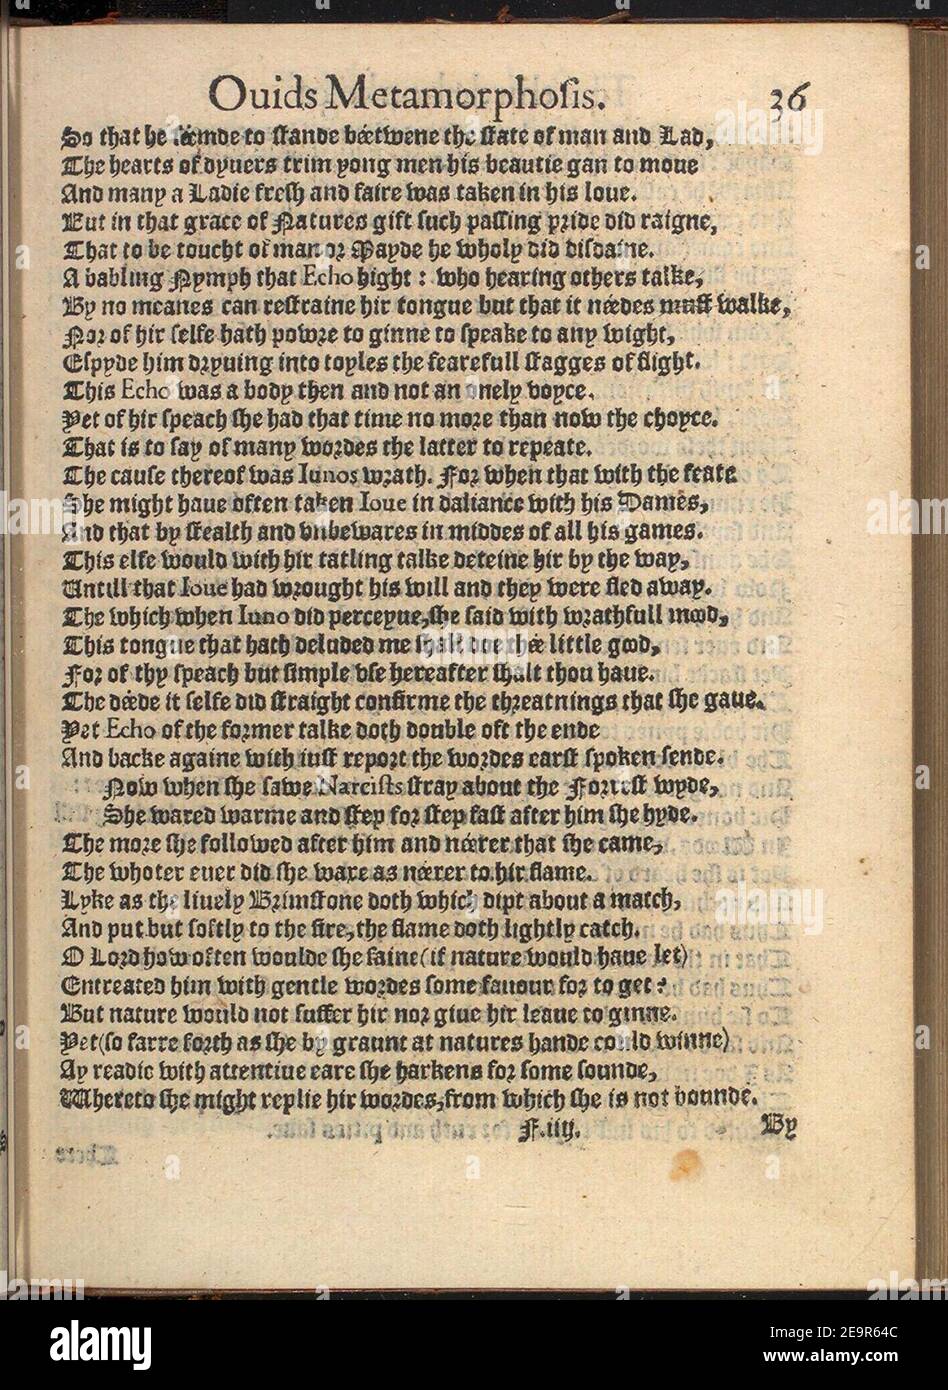 Metamorphosen (Ovid, 1567) - 0095. Stockfoto